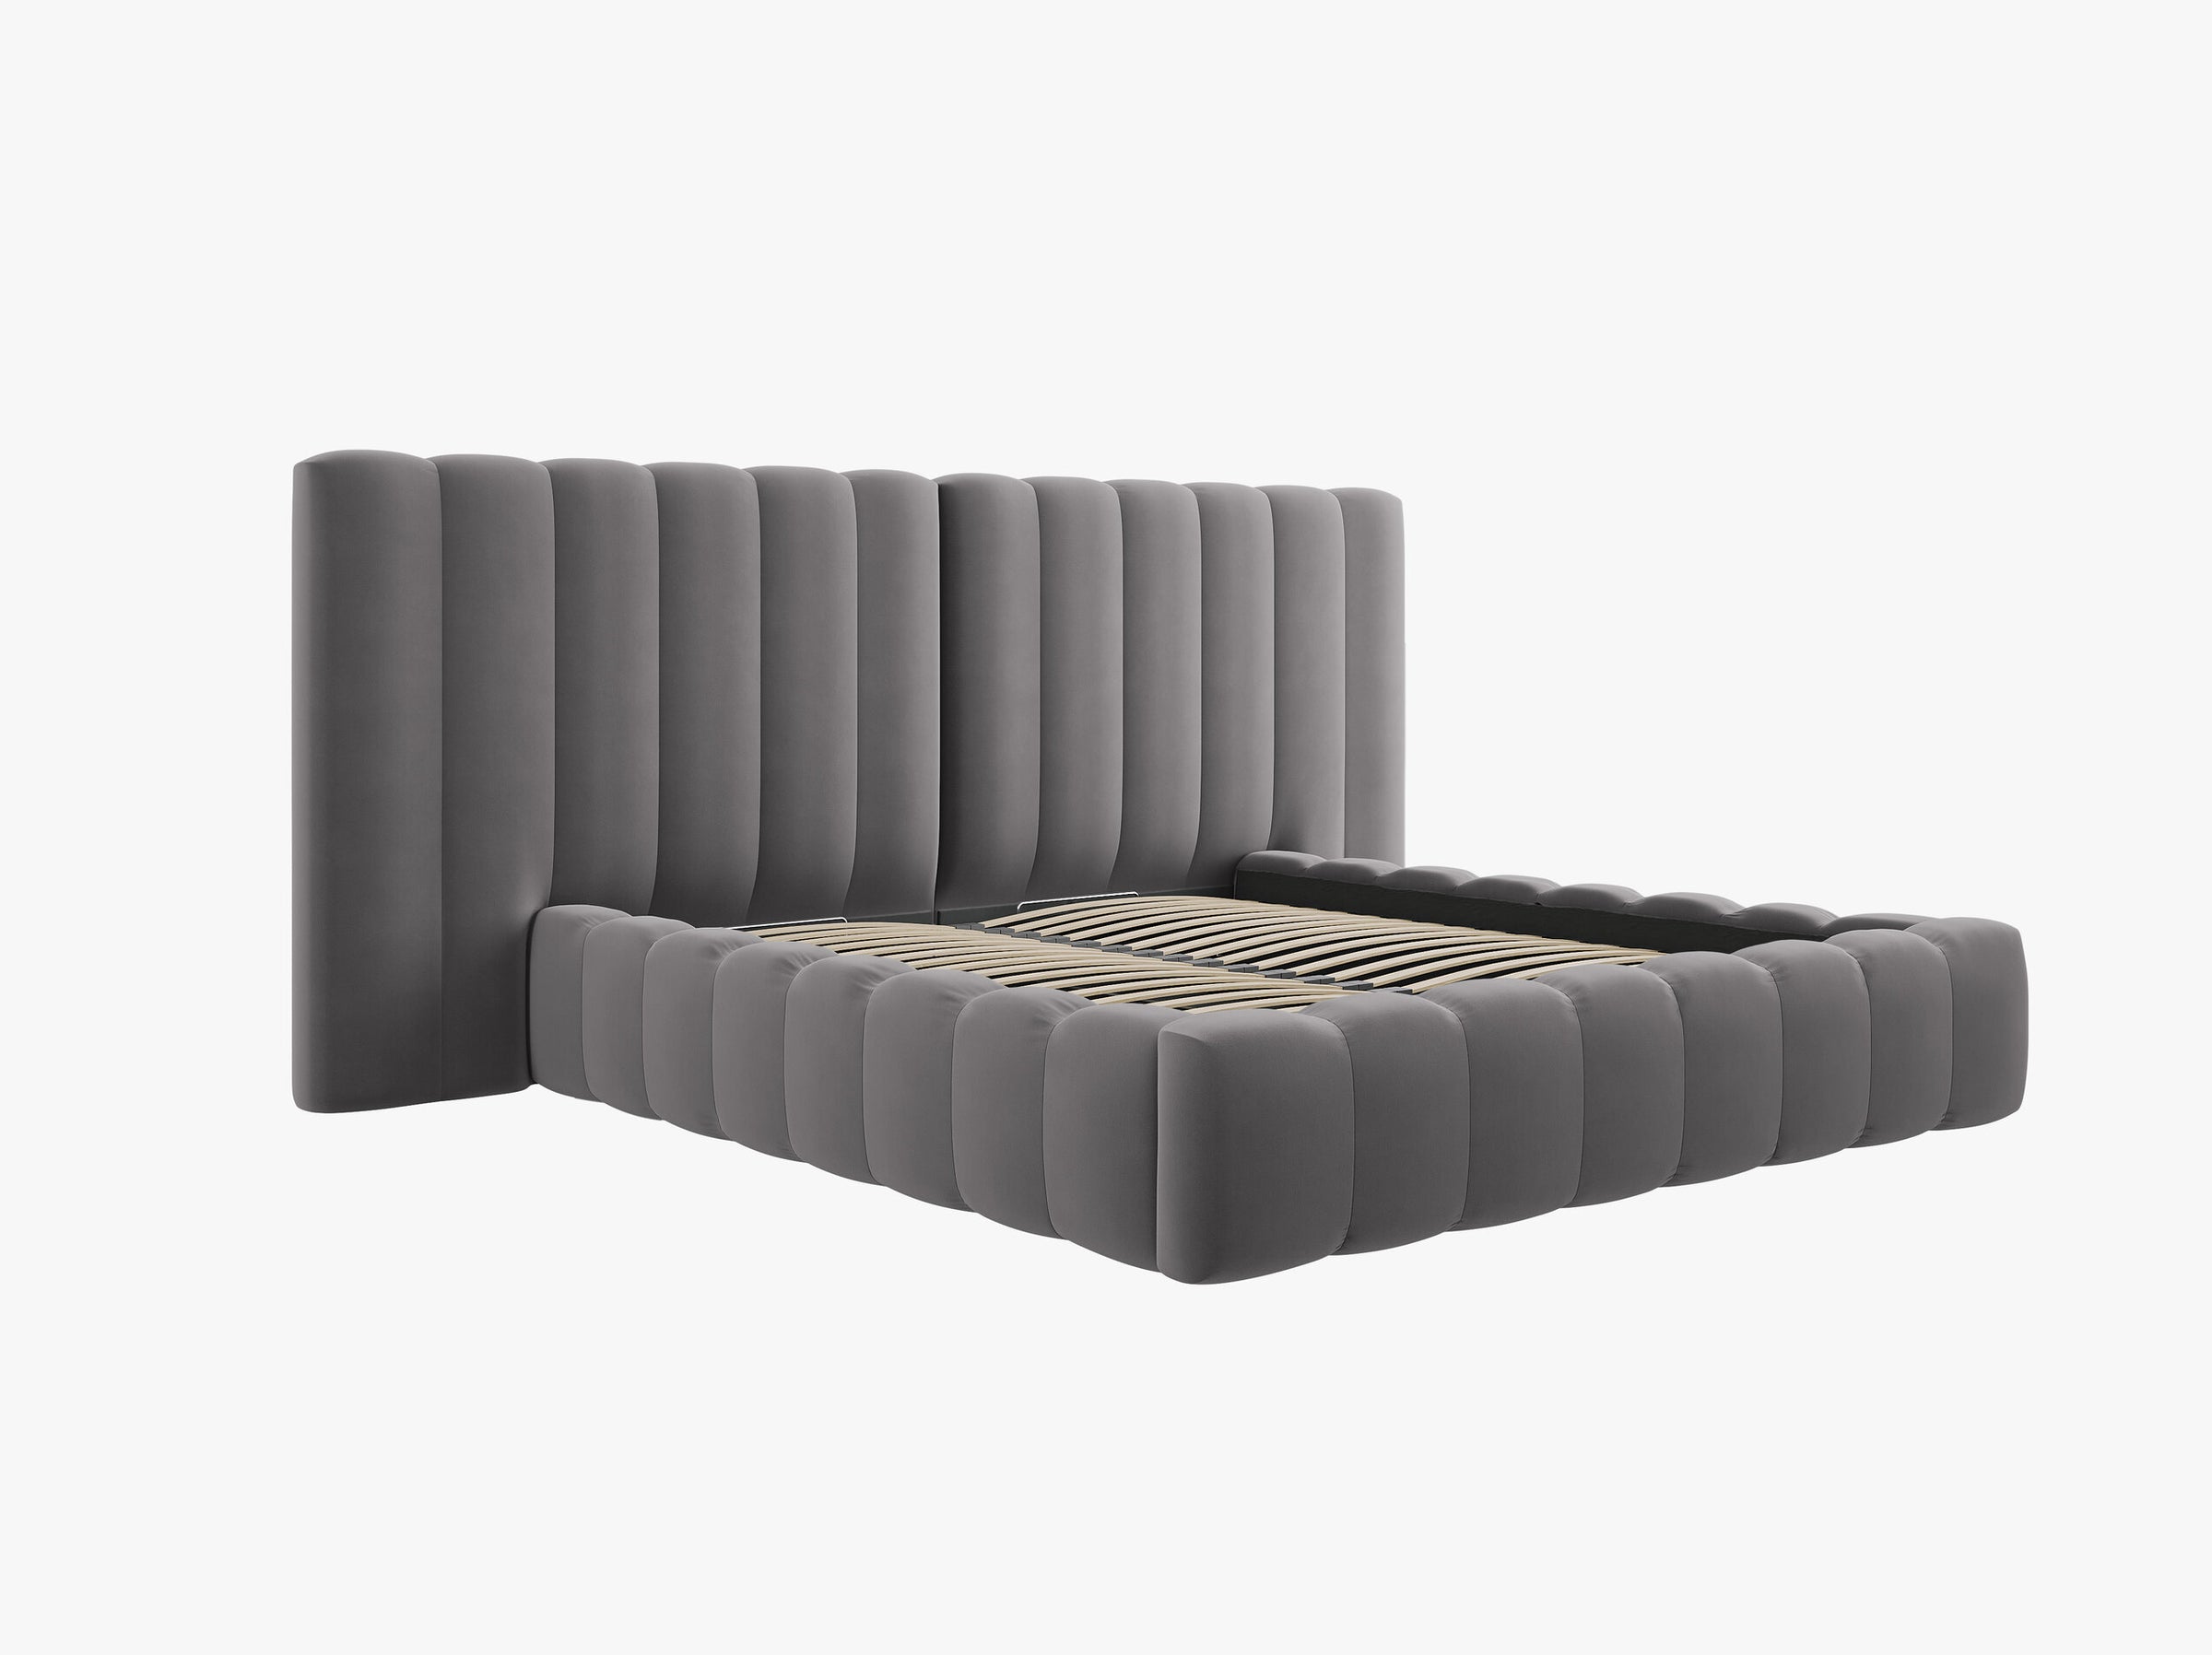 Kelp beds & mattresses velvet grey